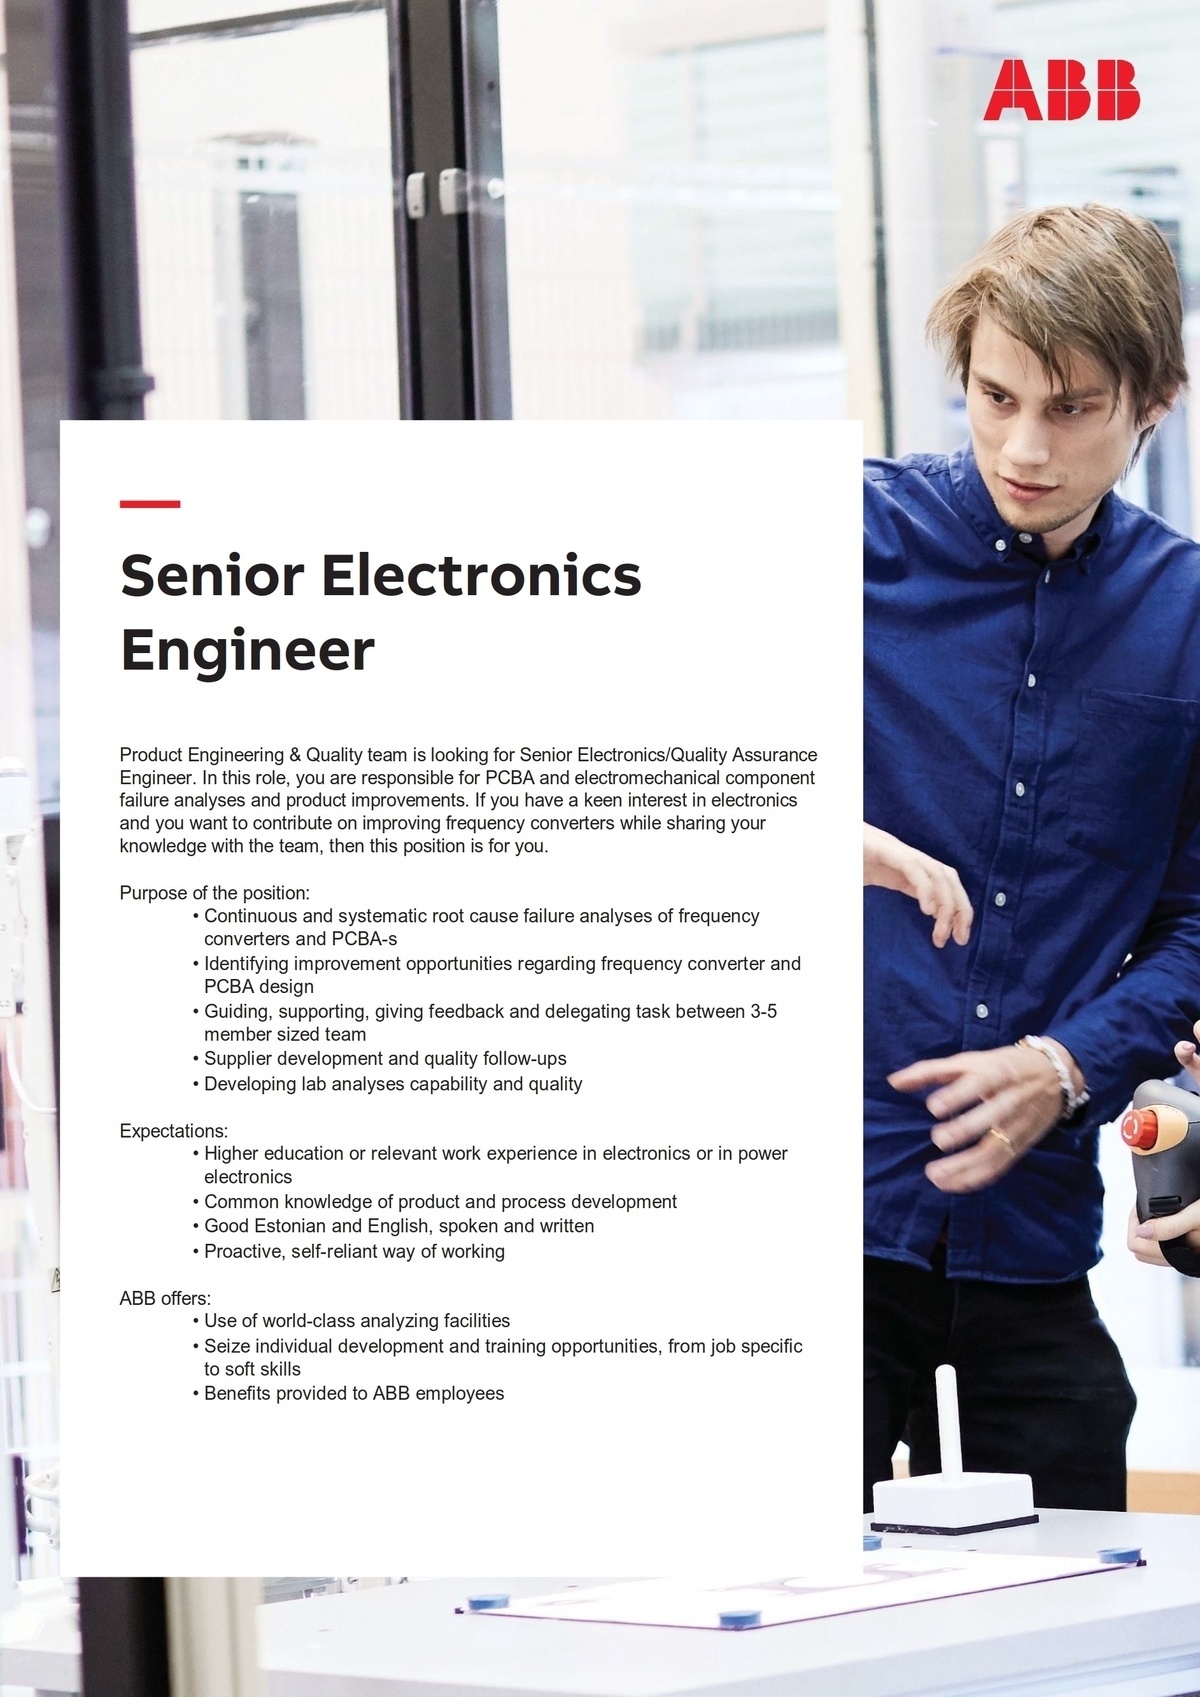 ABB AS Senior Electronics Engineer